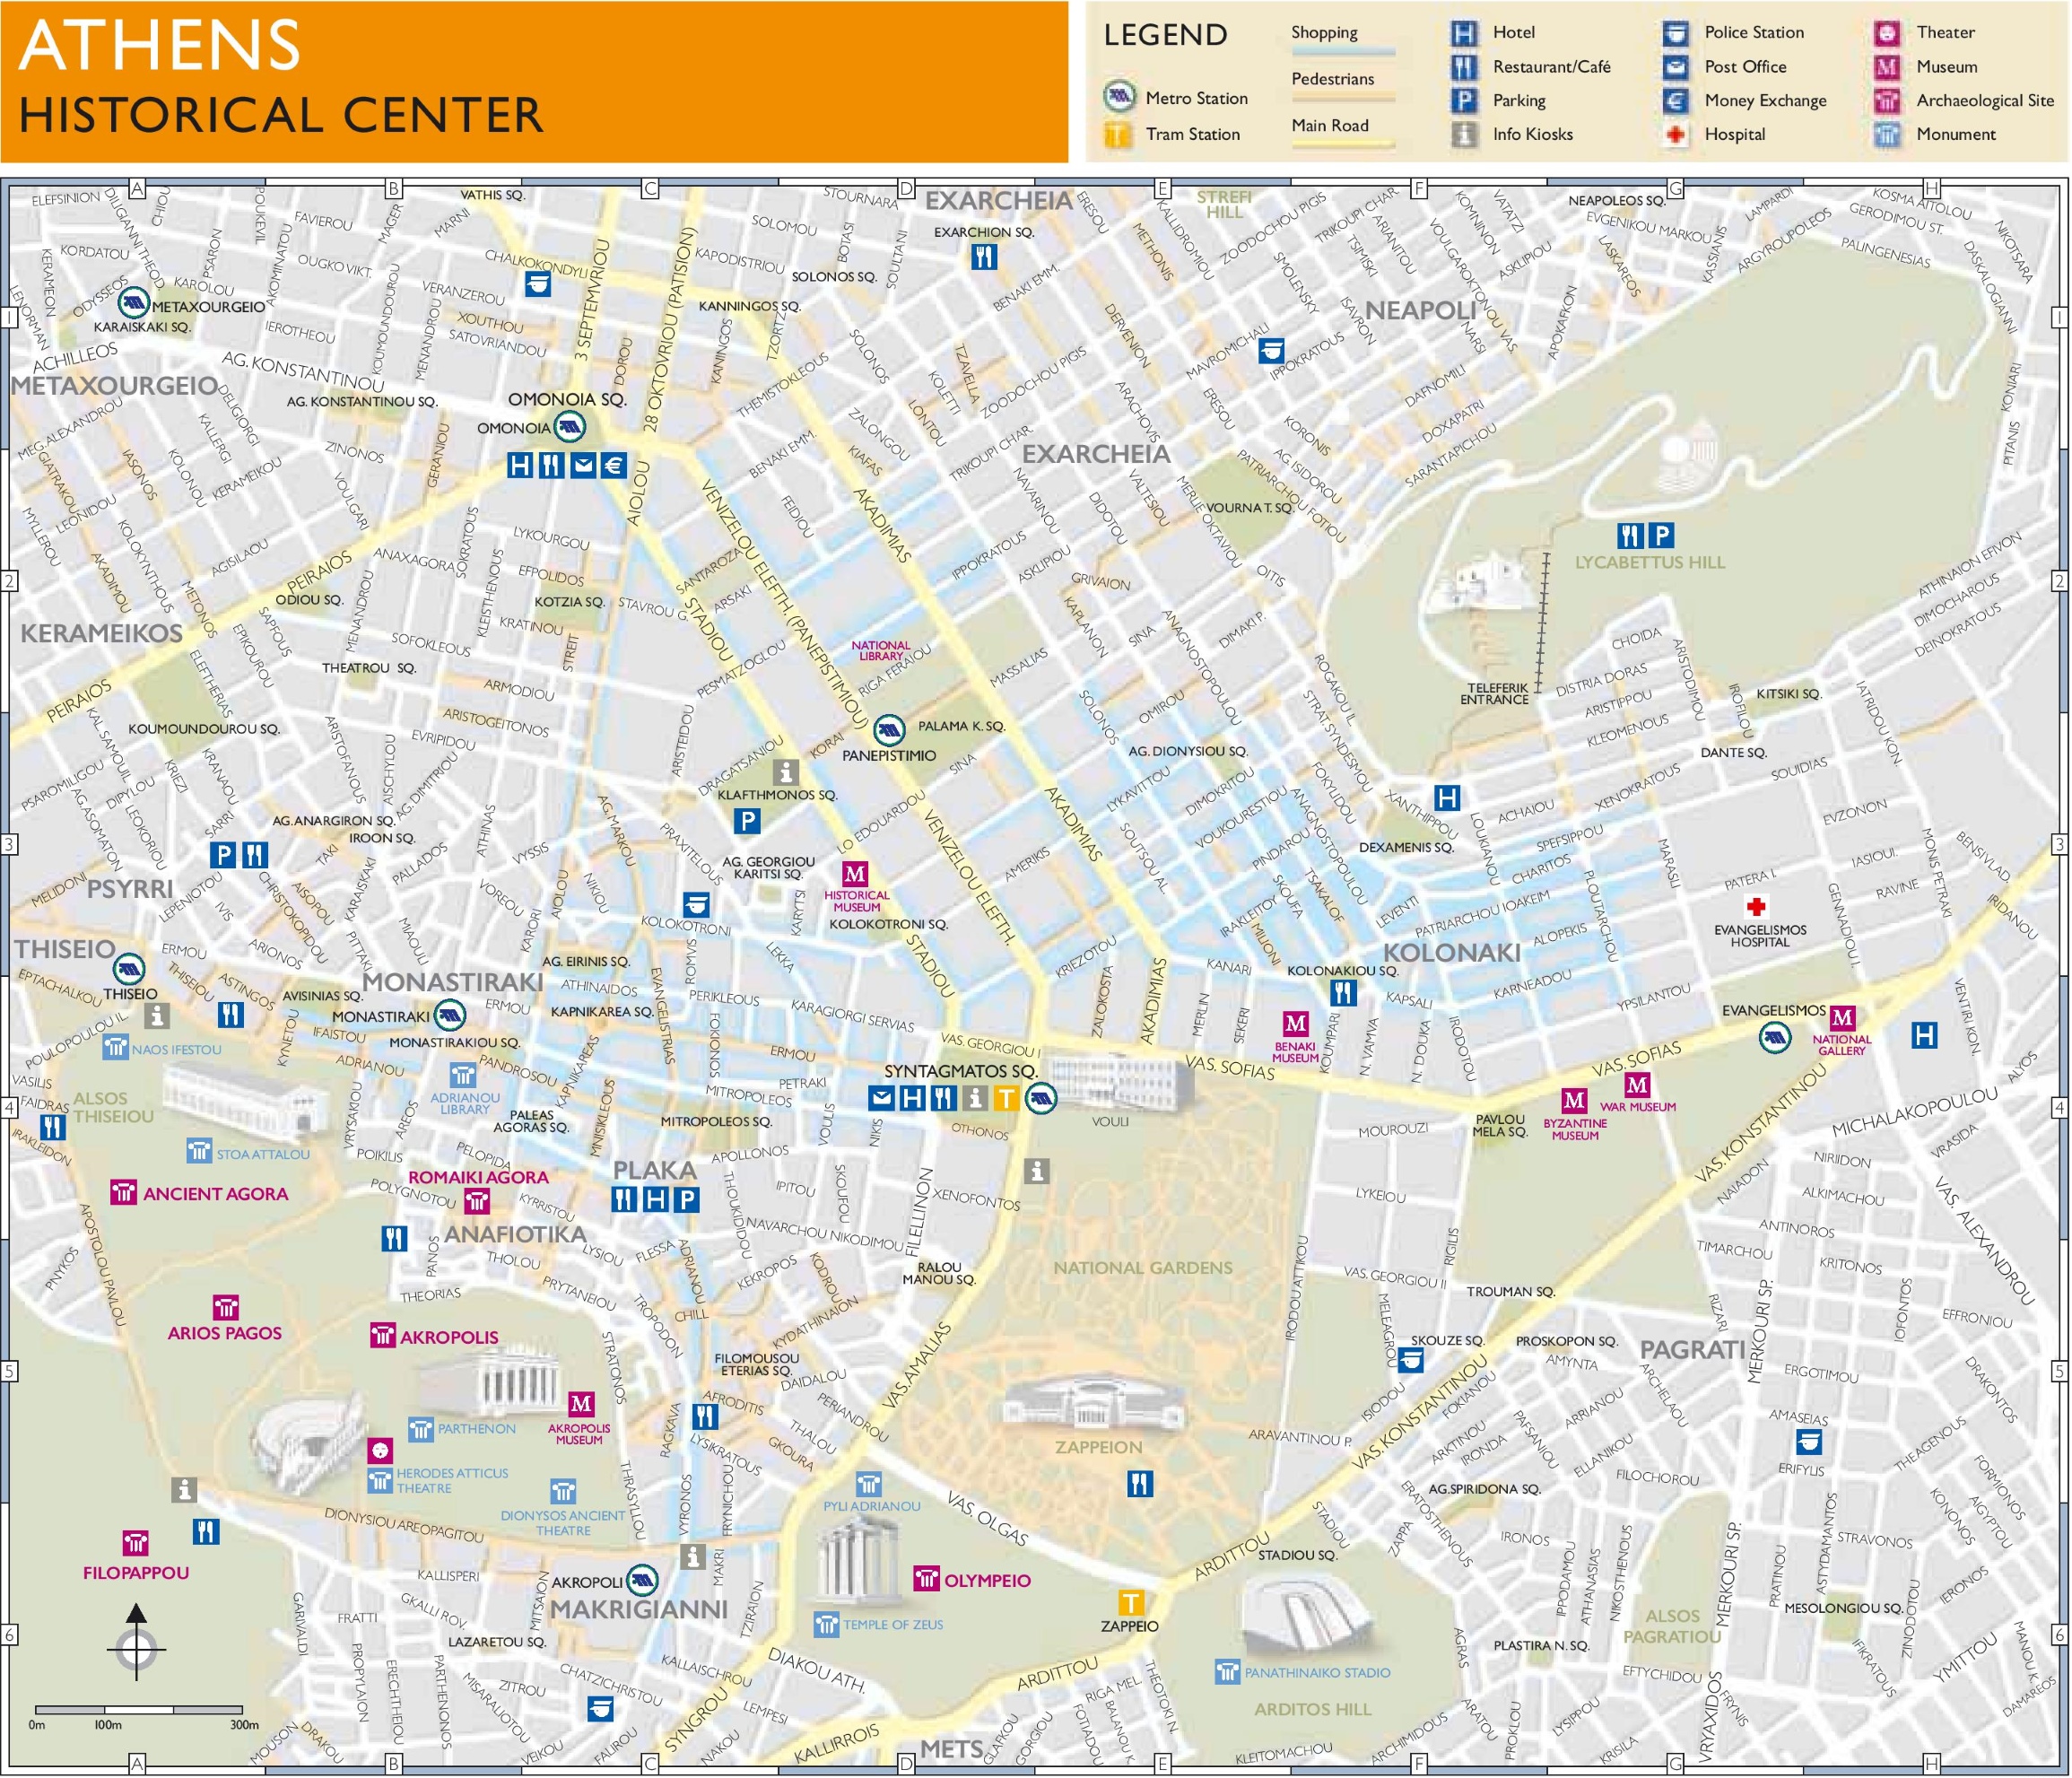 athens-historical-center-map.jpg